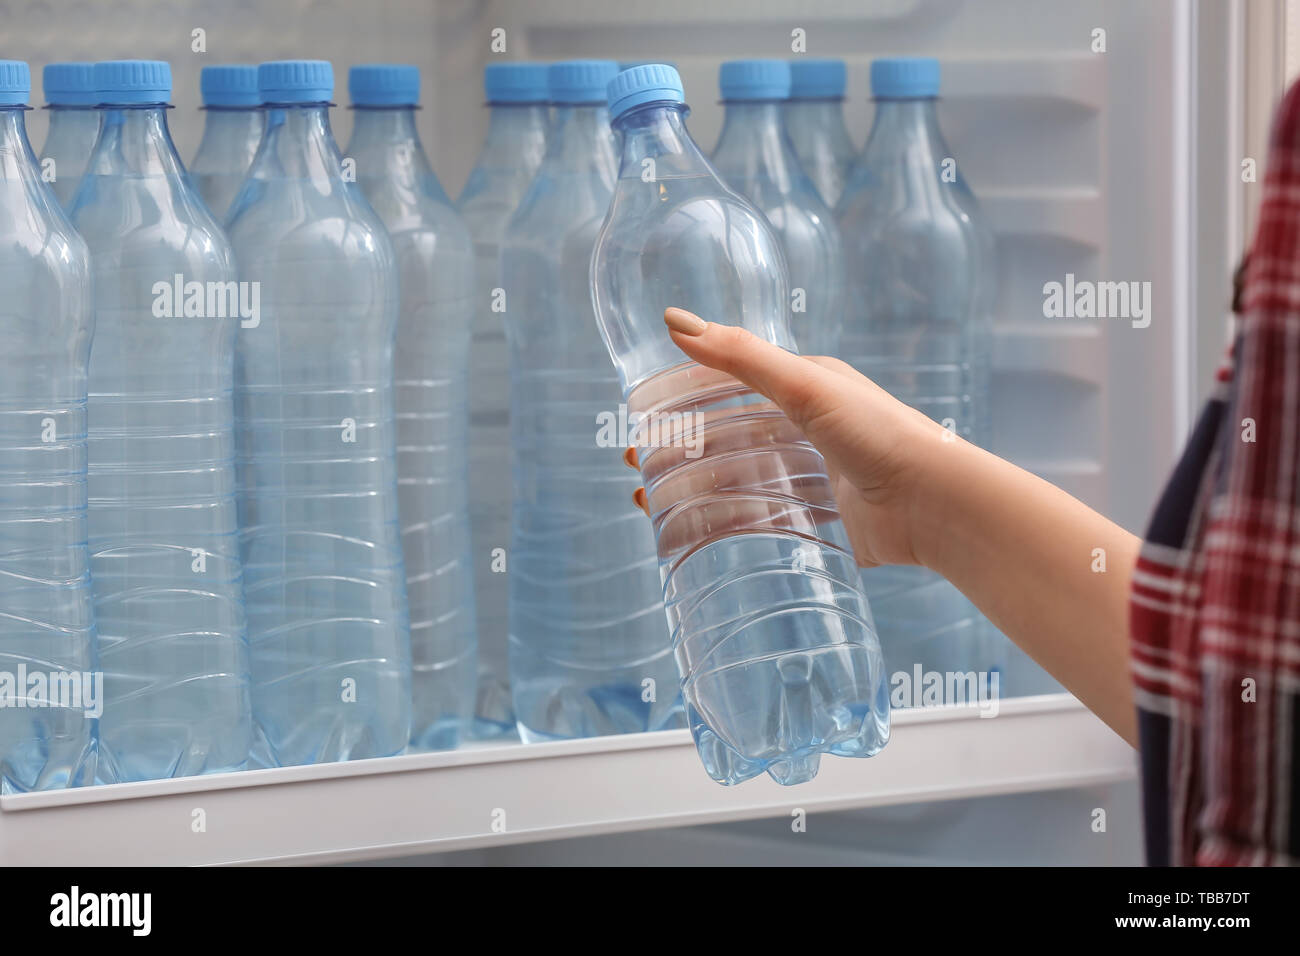 https://c8.alamy.com/comp/TBB7DT/woman-taking-bottle-of-water-from-fridge-in-shop-TBB7DT.jpg